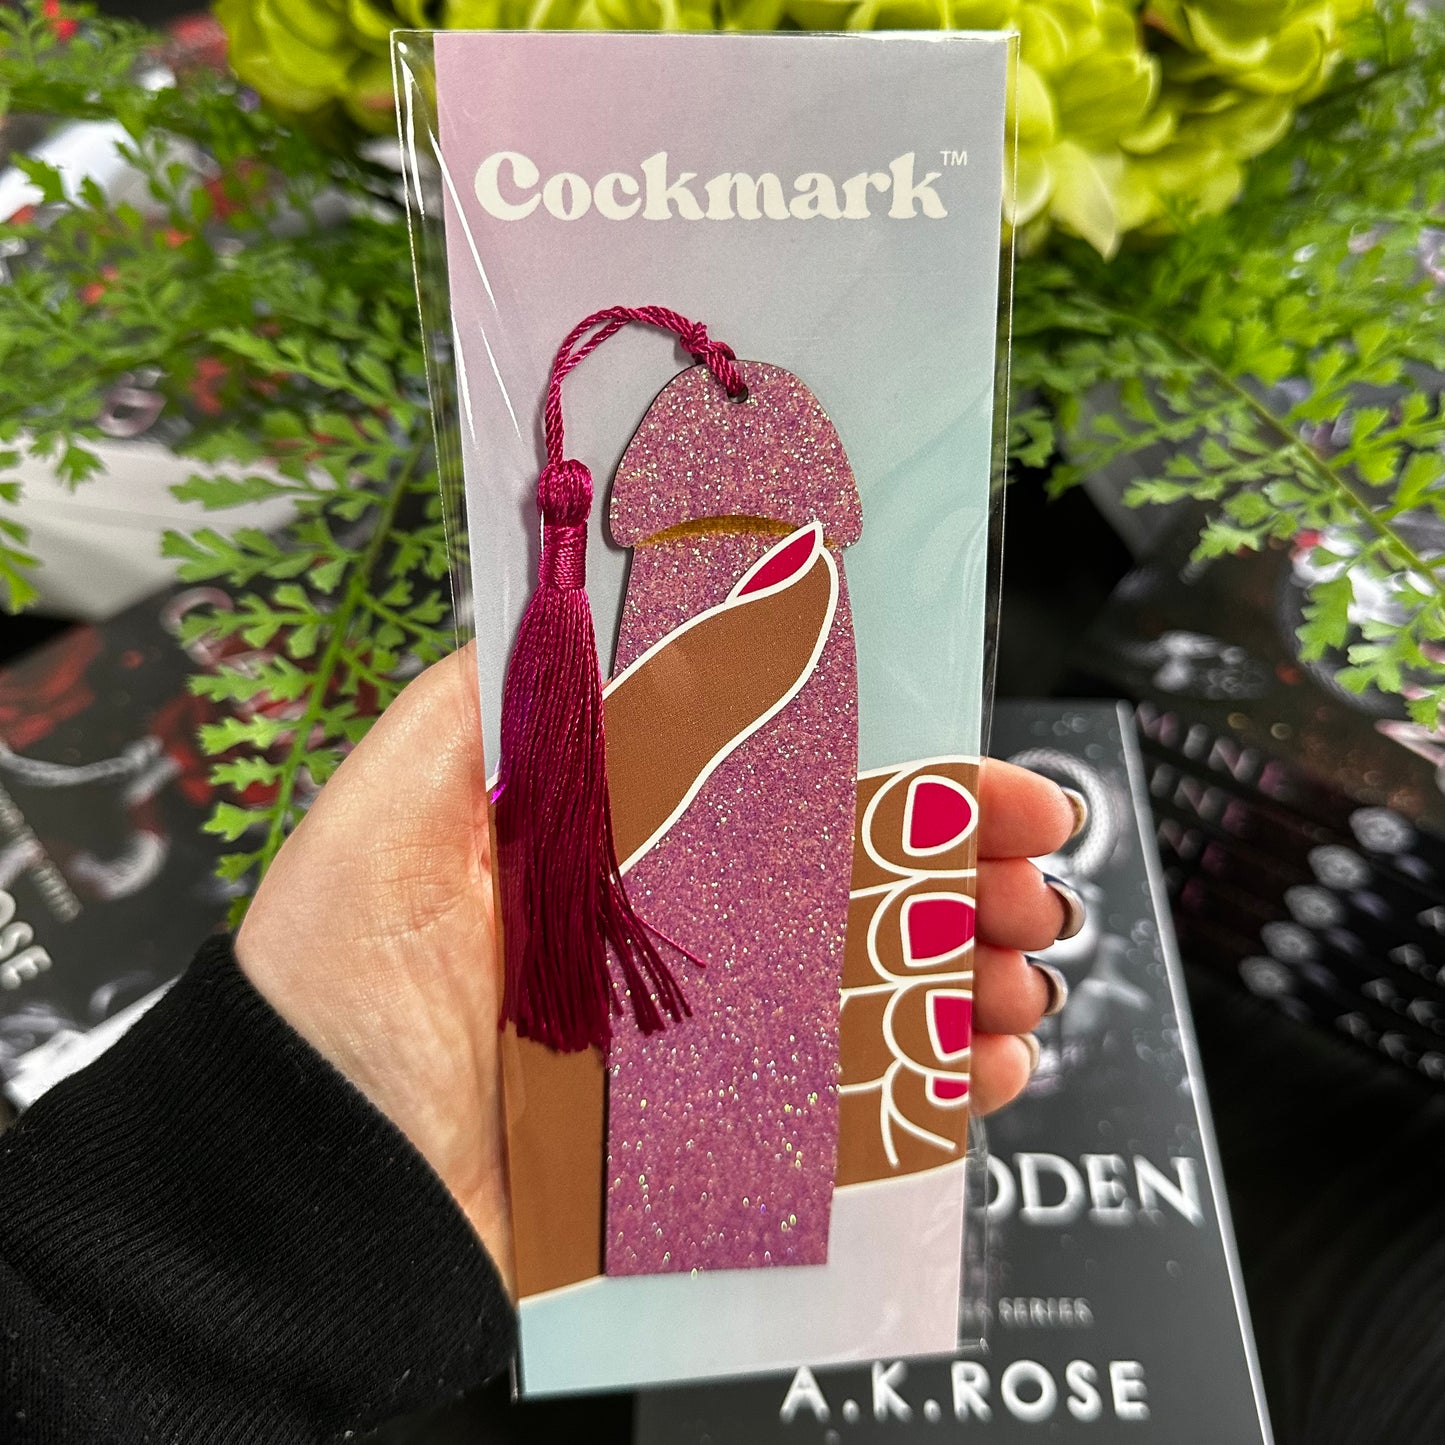 Cockmark Bookmark